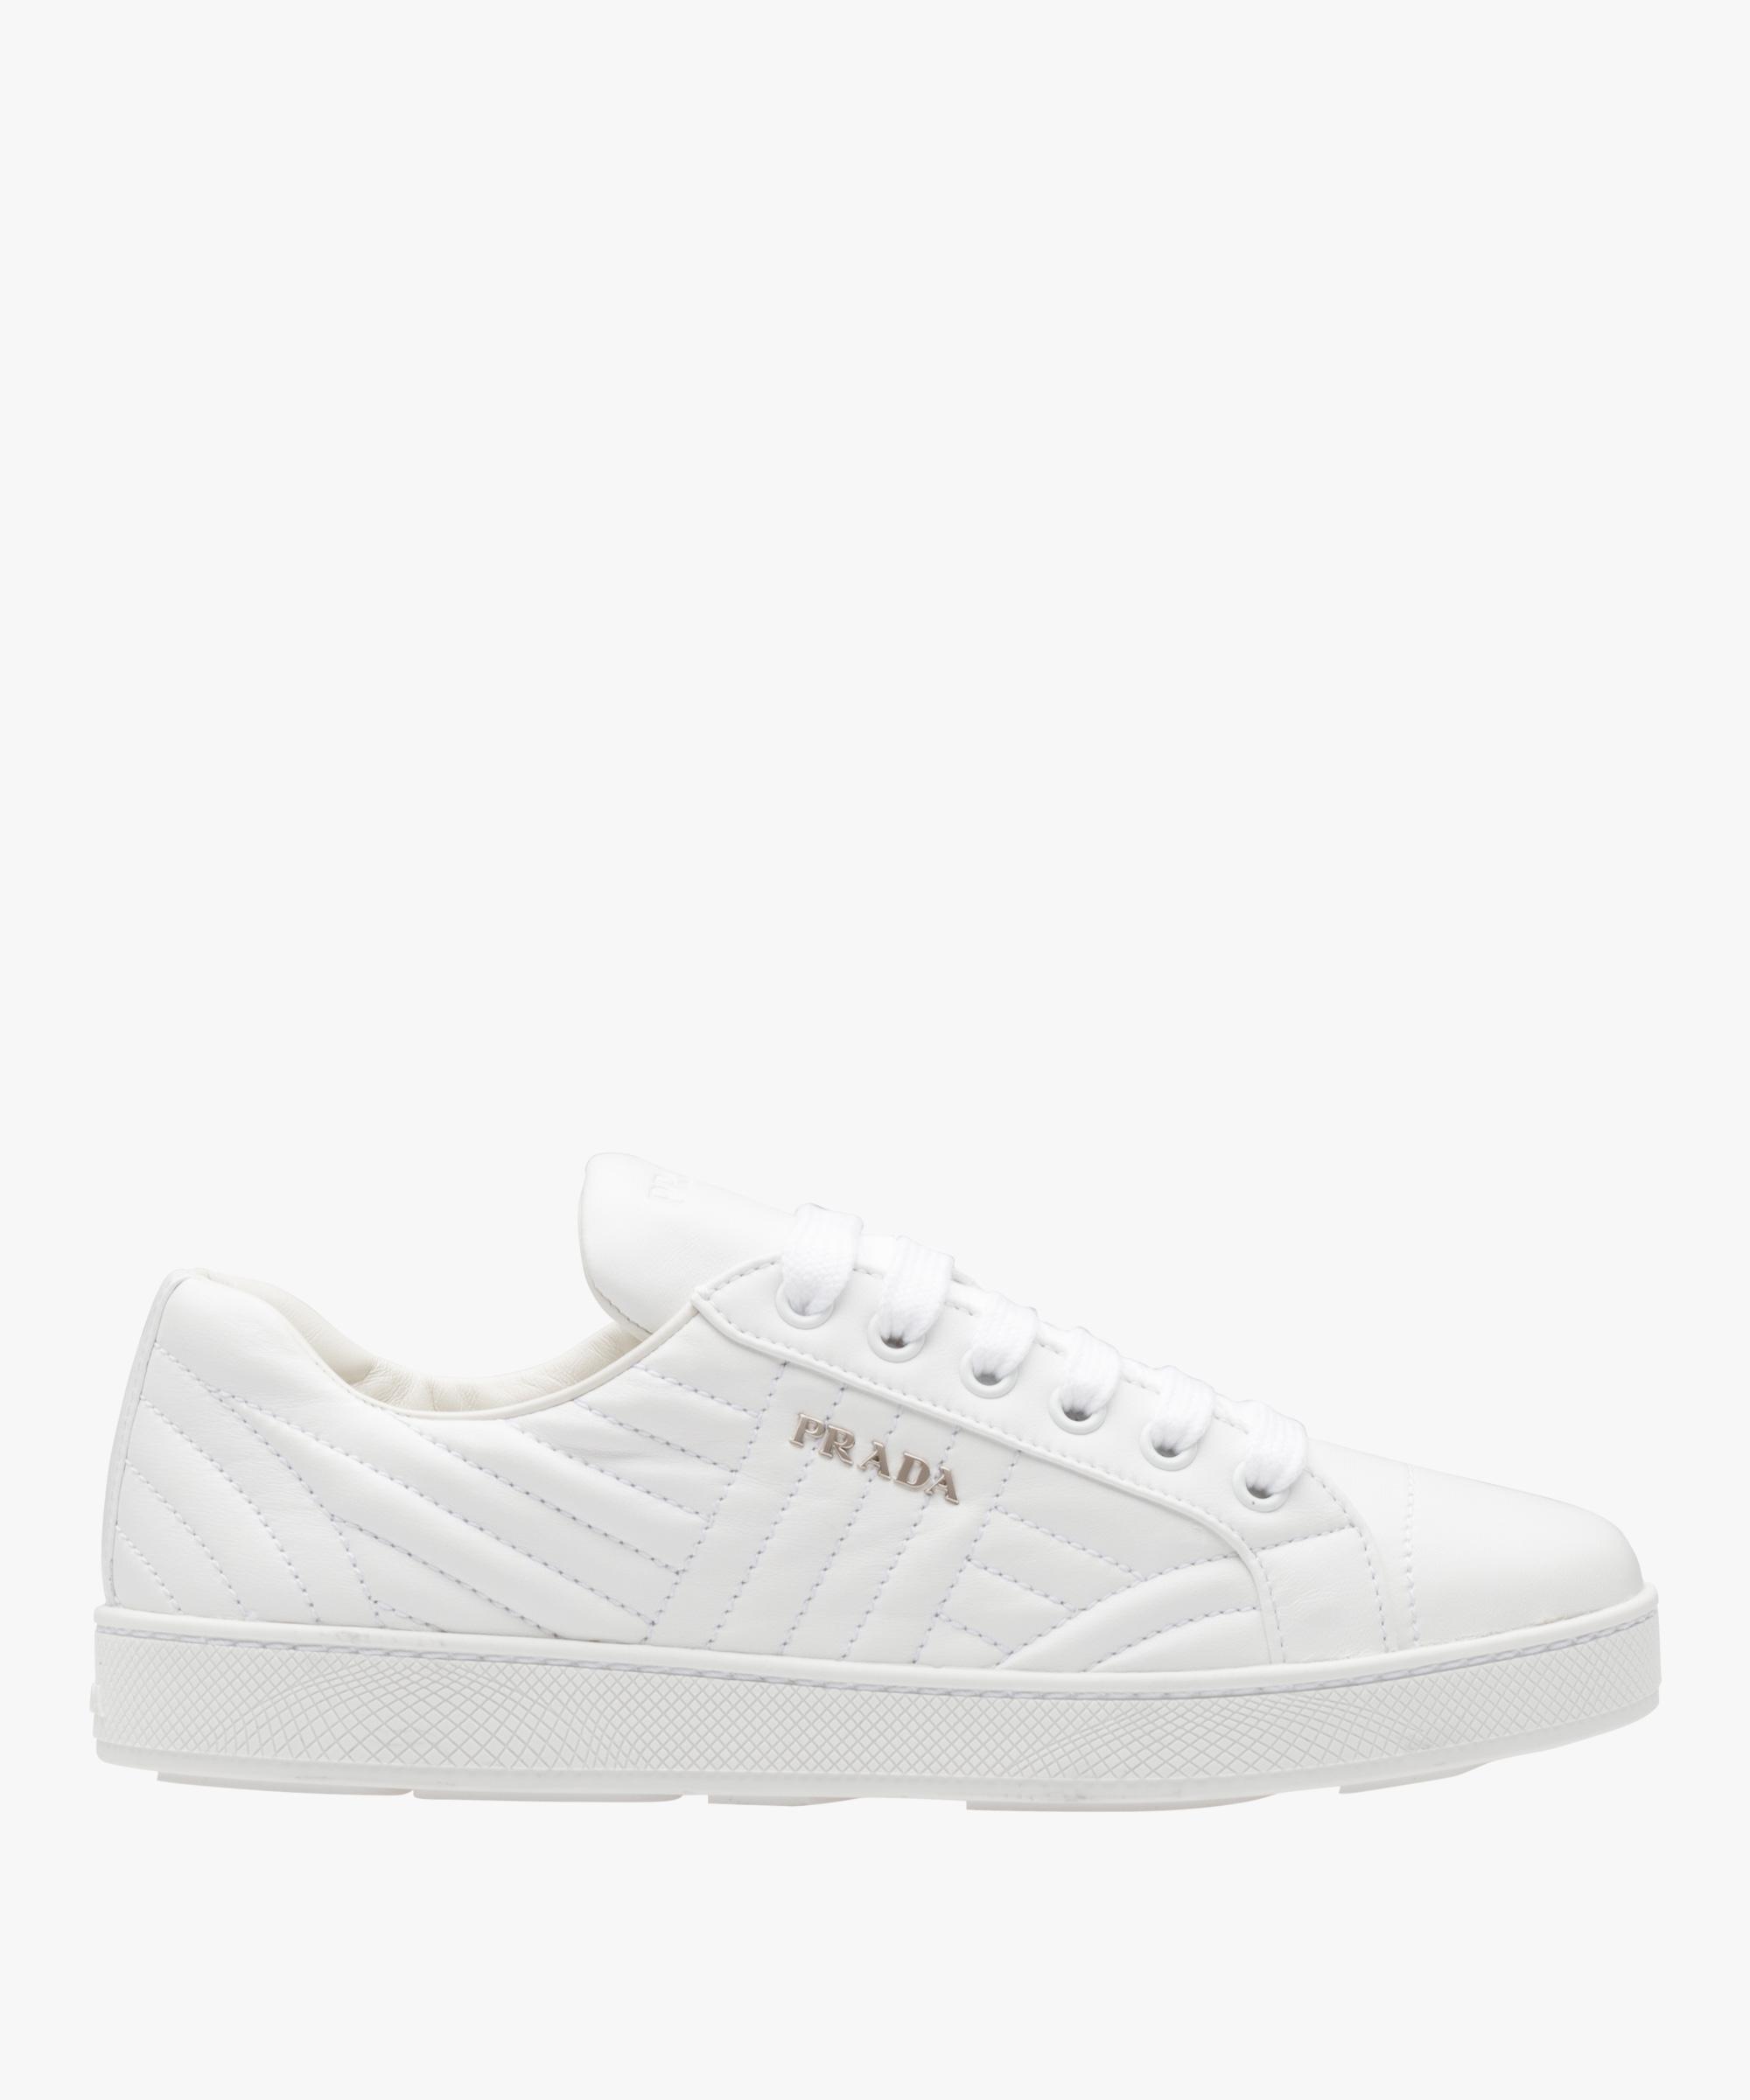 Prada Nappa Leather Sneakers in White 